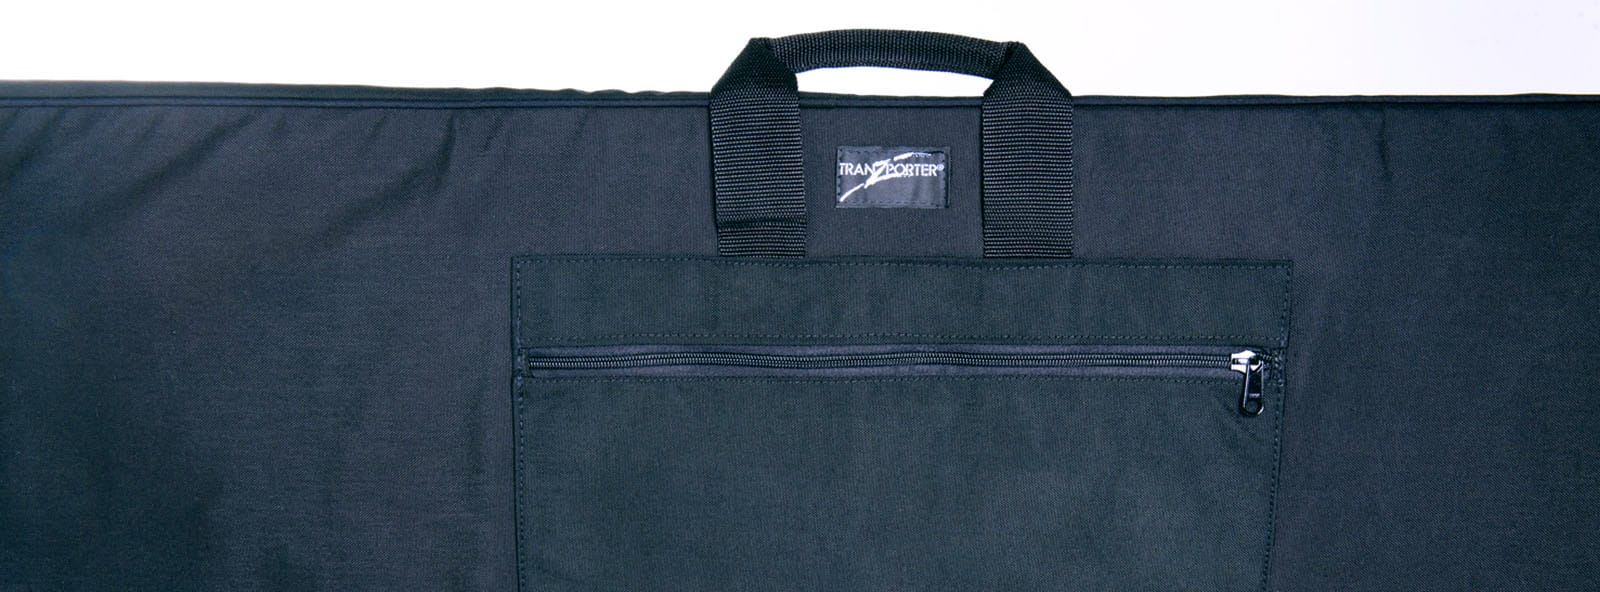 Black Art Portfolio Case 24 X 36 with Shoulder Strap